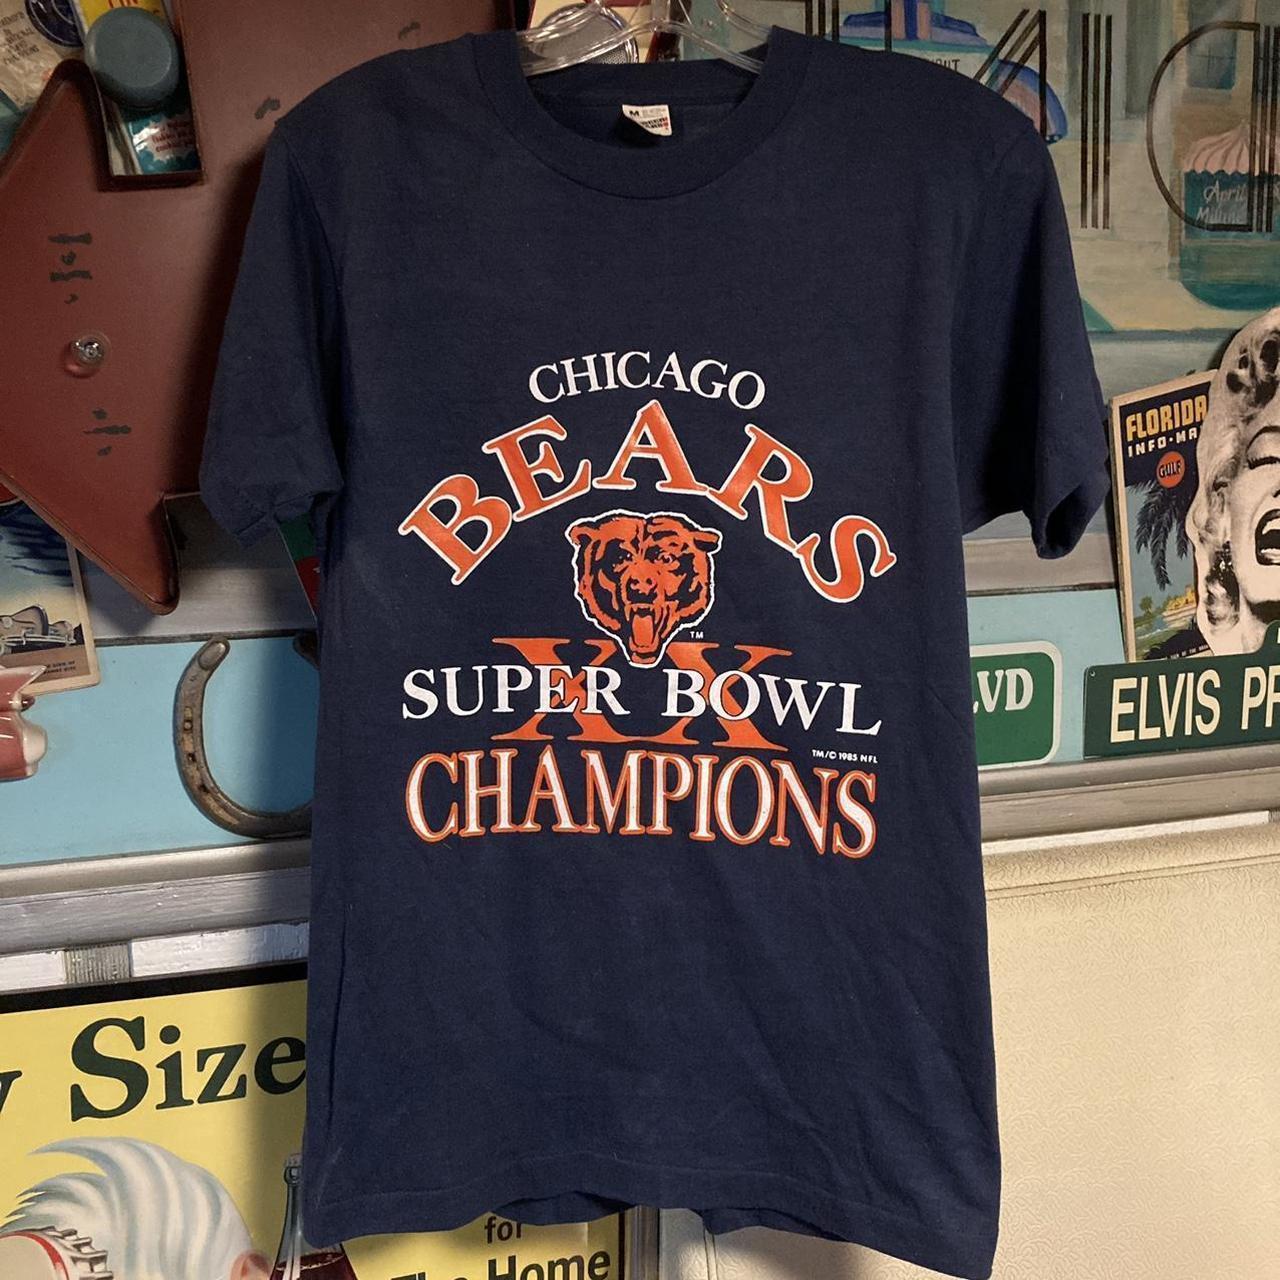 chicago bears superbowl shirt